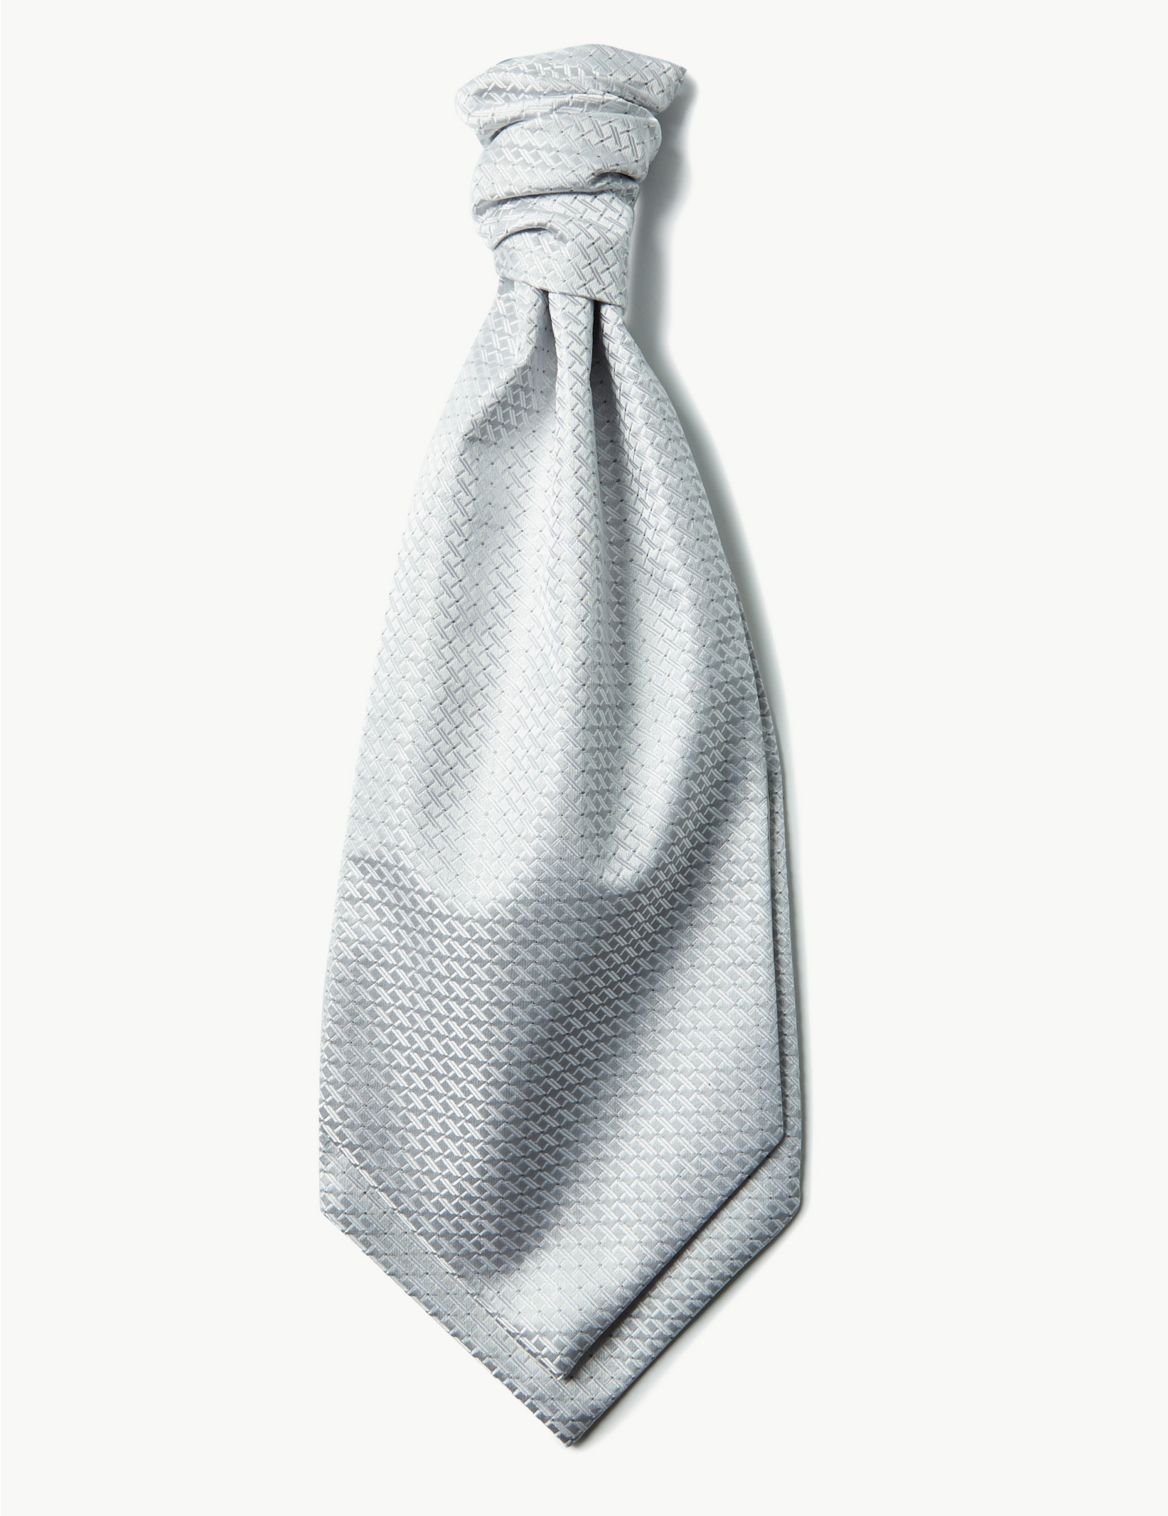 Jacquard Cravat & Pocket Square Set grey